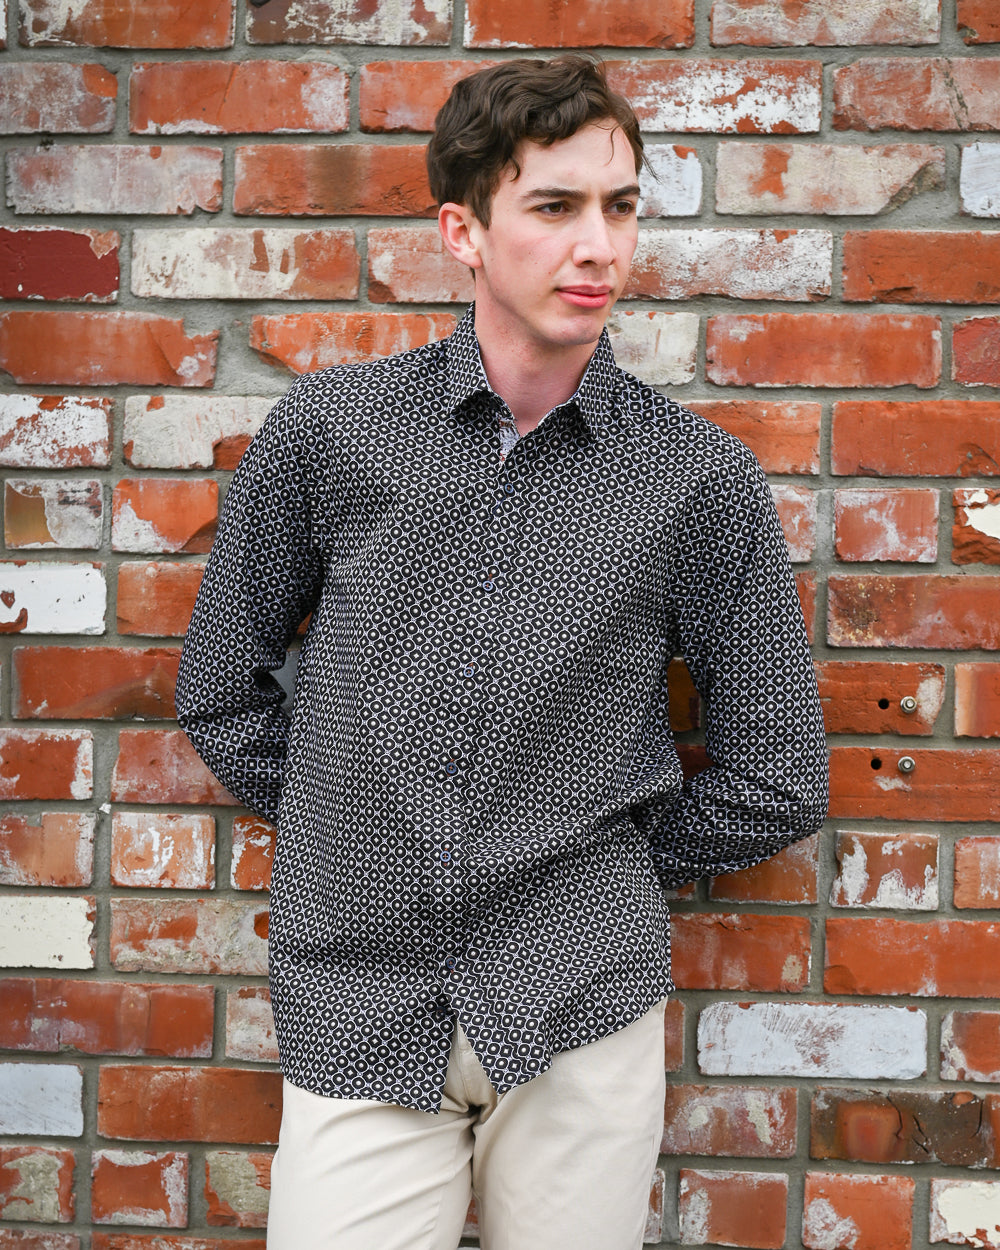 Man wearing a patterned long-sleeve shirt by Franco Negretti